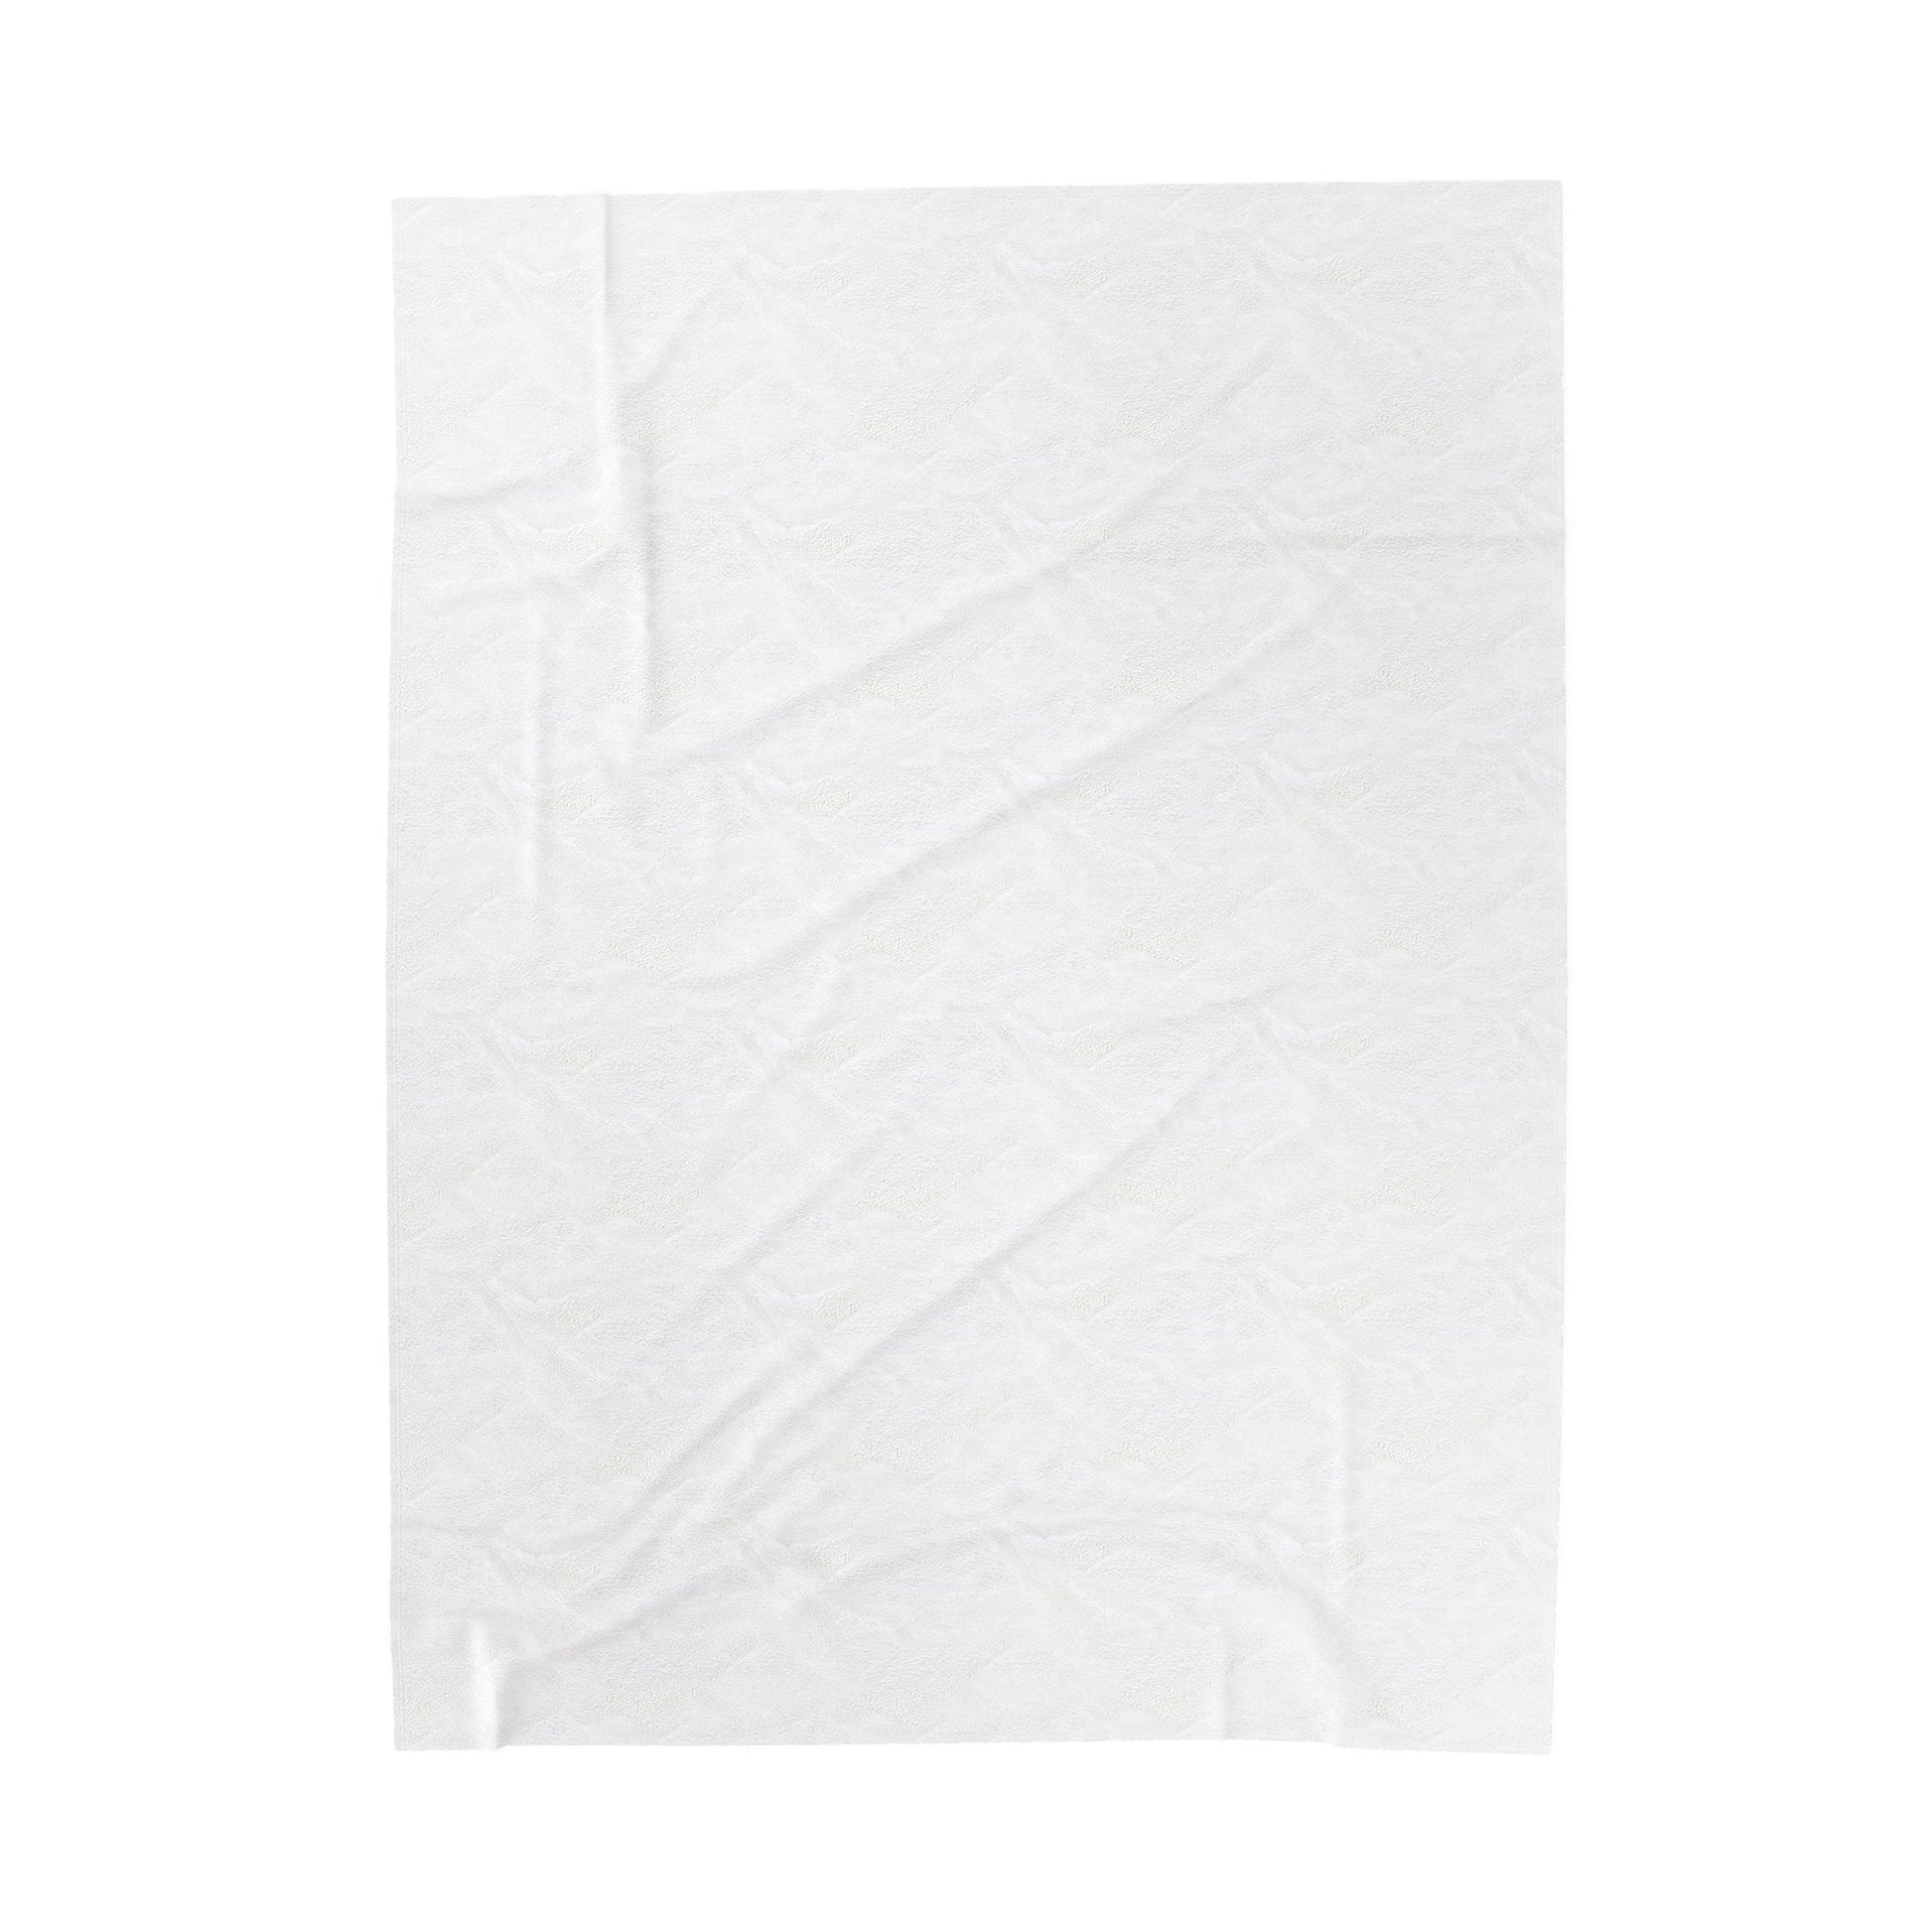 Fern Stardust - Plush Blanket-Plush Blanket-Mr.Zao - Krazy Art Gallery